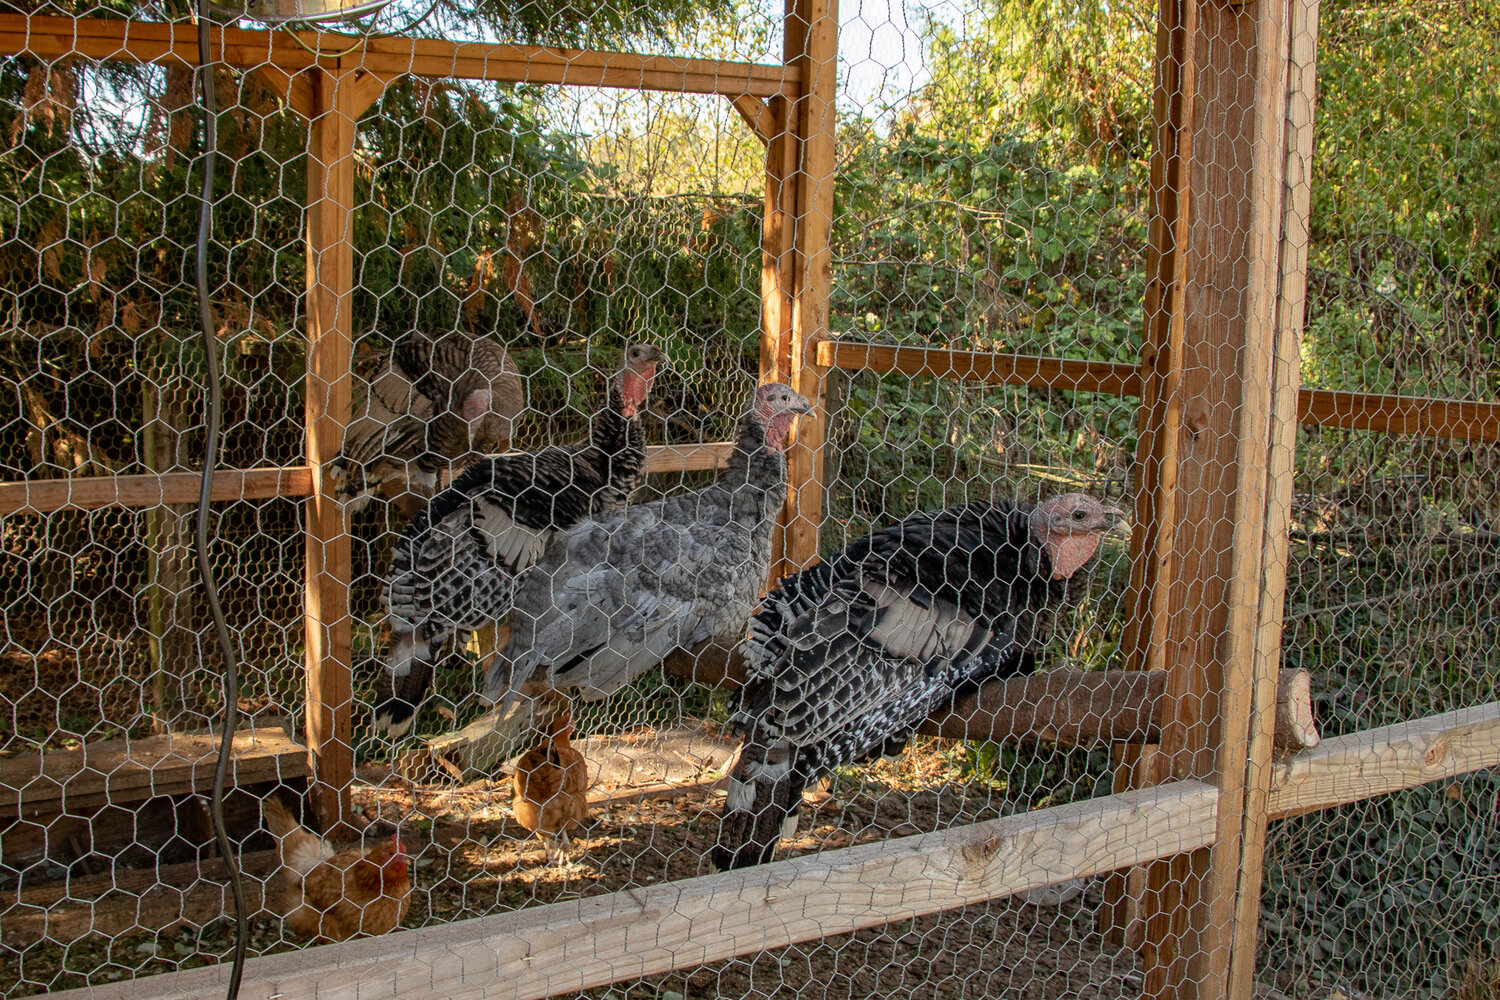 Turkeys sit on a perch in their coop at LaCamas Creek Farm in Onalaska on Sunday, Oct. 8.